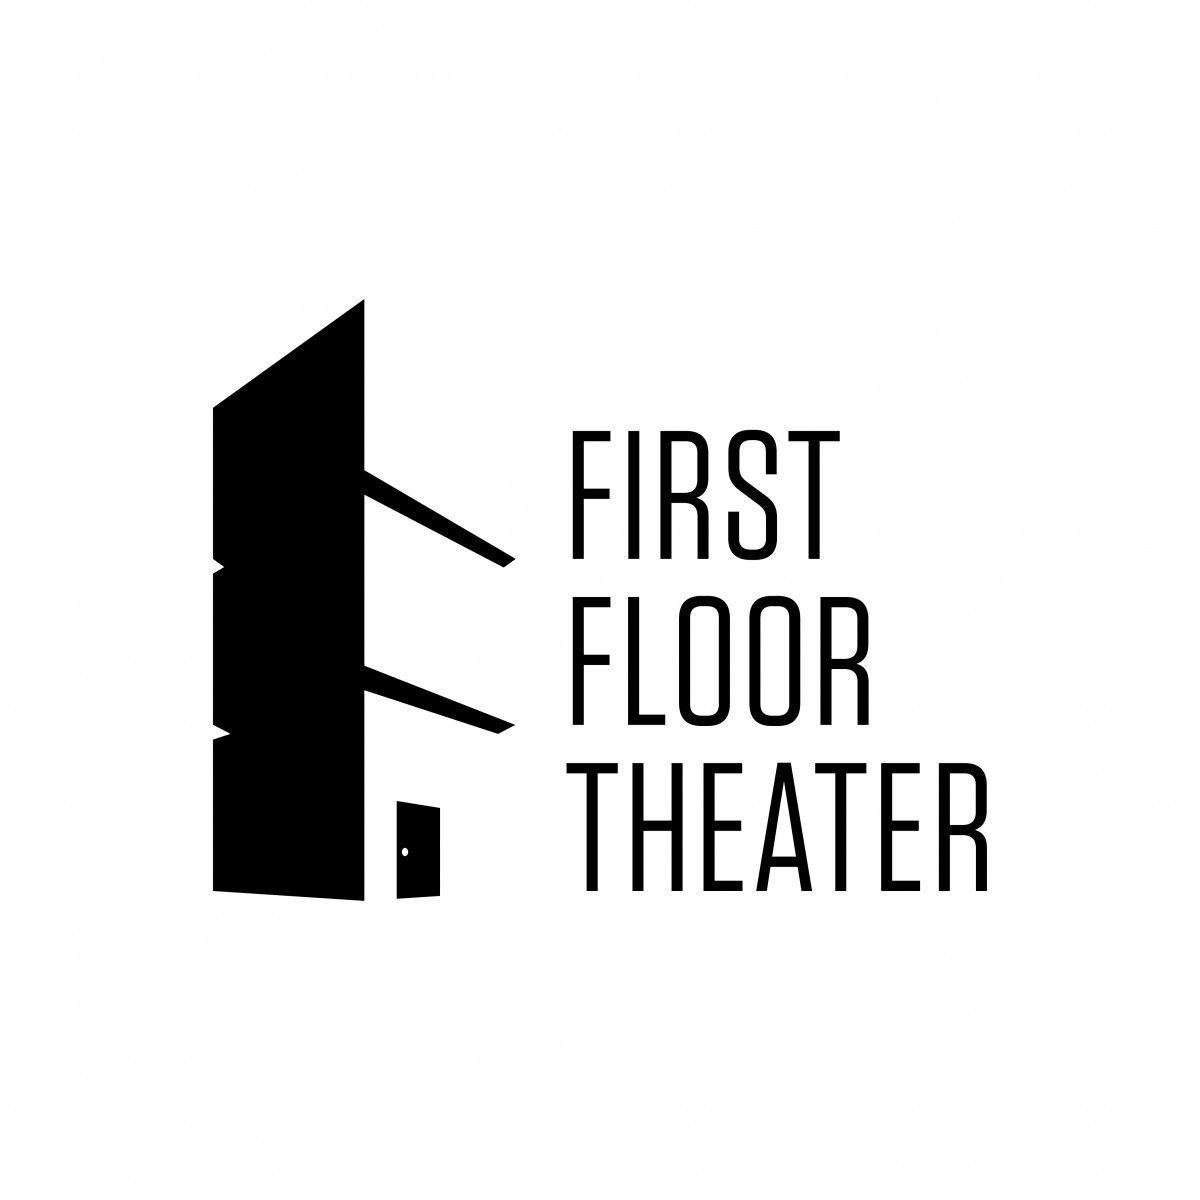 Theater Logo - First Floor Theater Logo